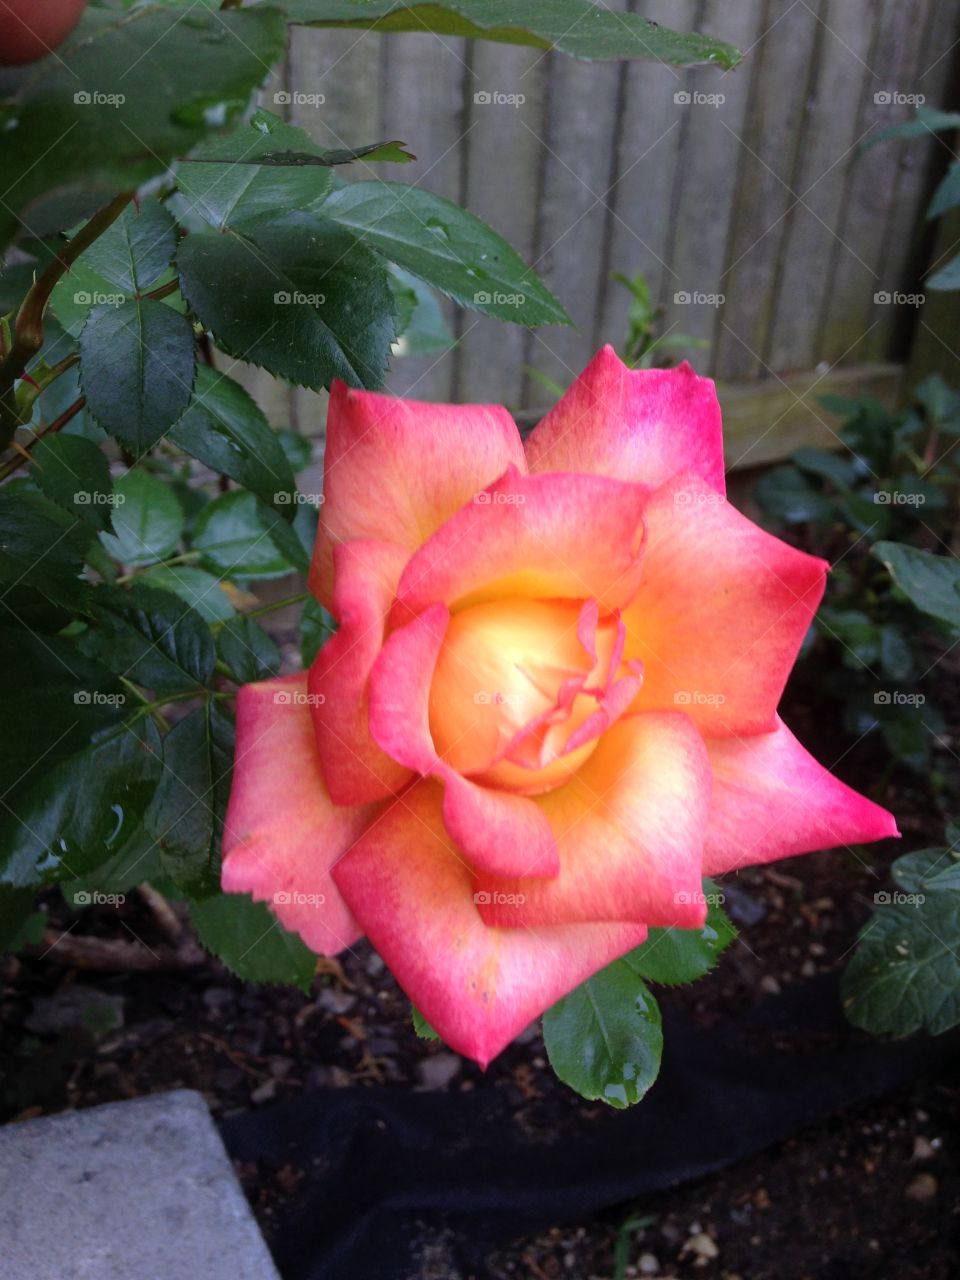 "Dick Clark" Rose bush. My beautiful rose bush that blooms several times a year!